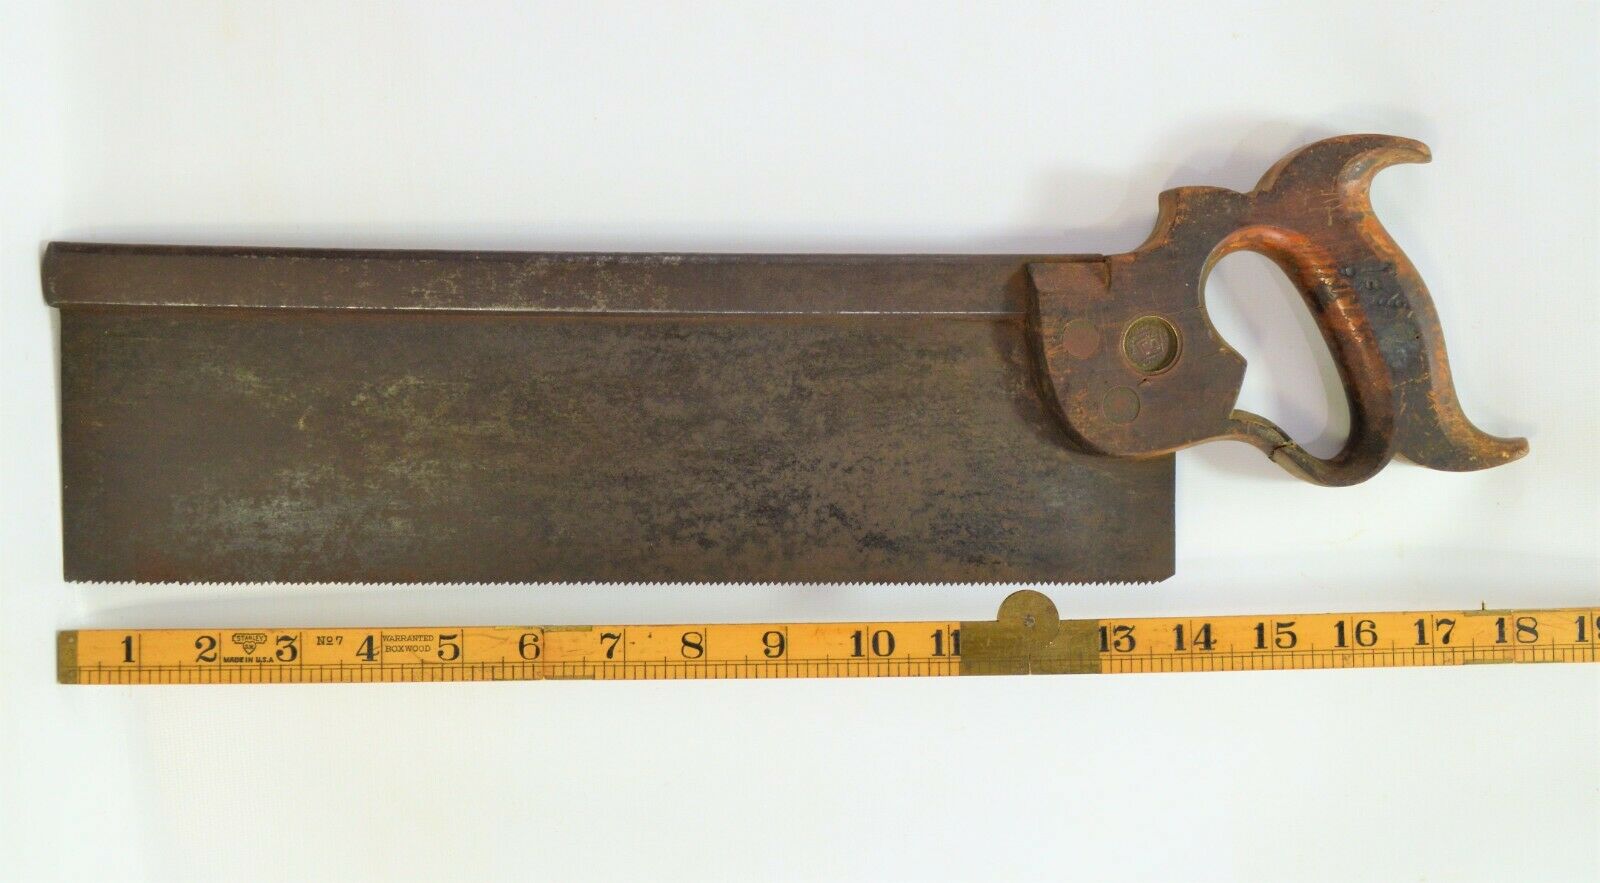 Vintage Disston No. 4, 12 Ppi 14" Backsaw, Applewood Handle, A Great Saw